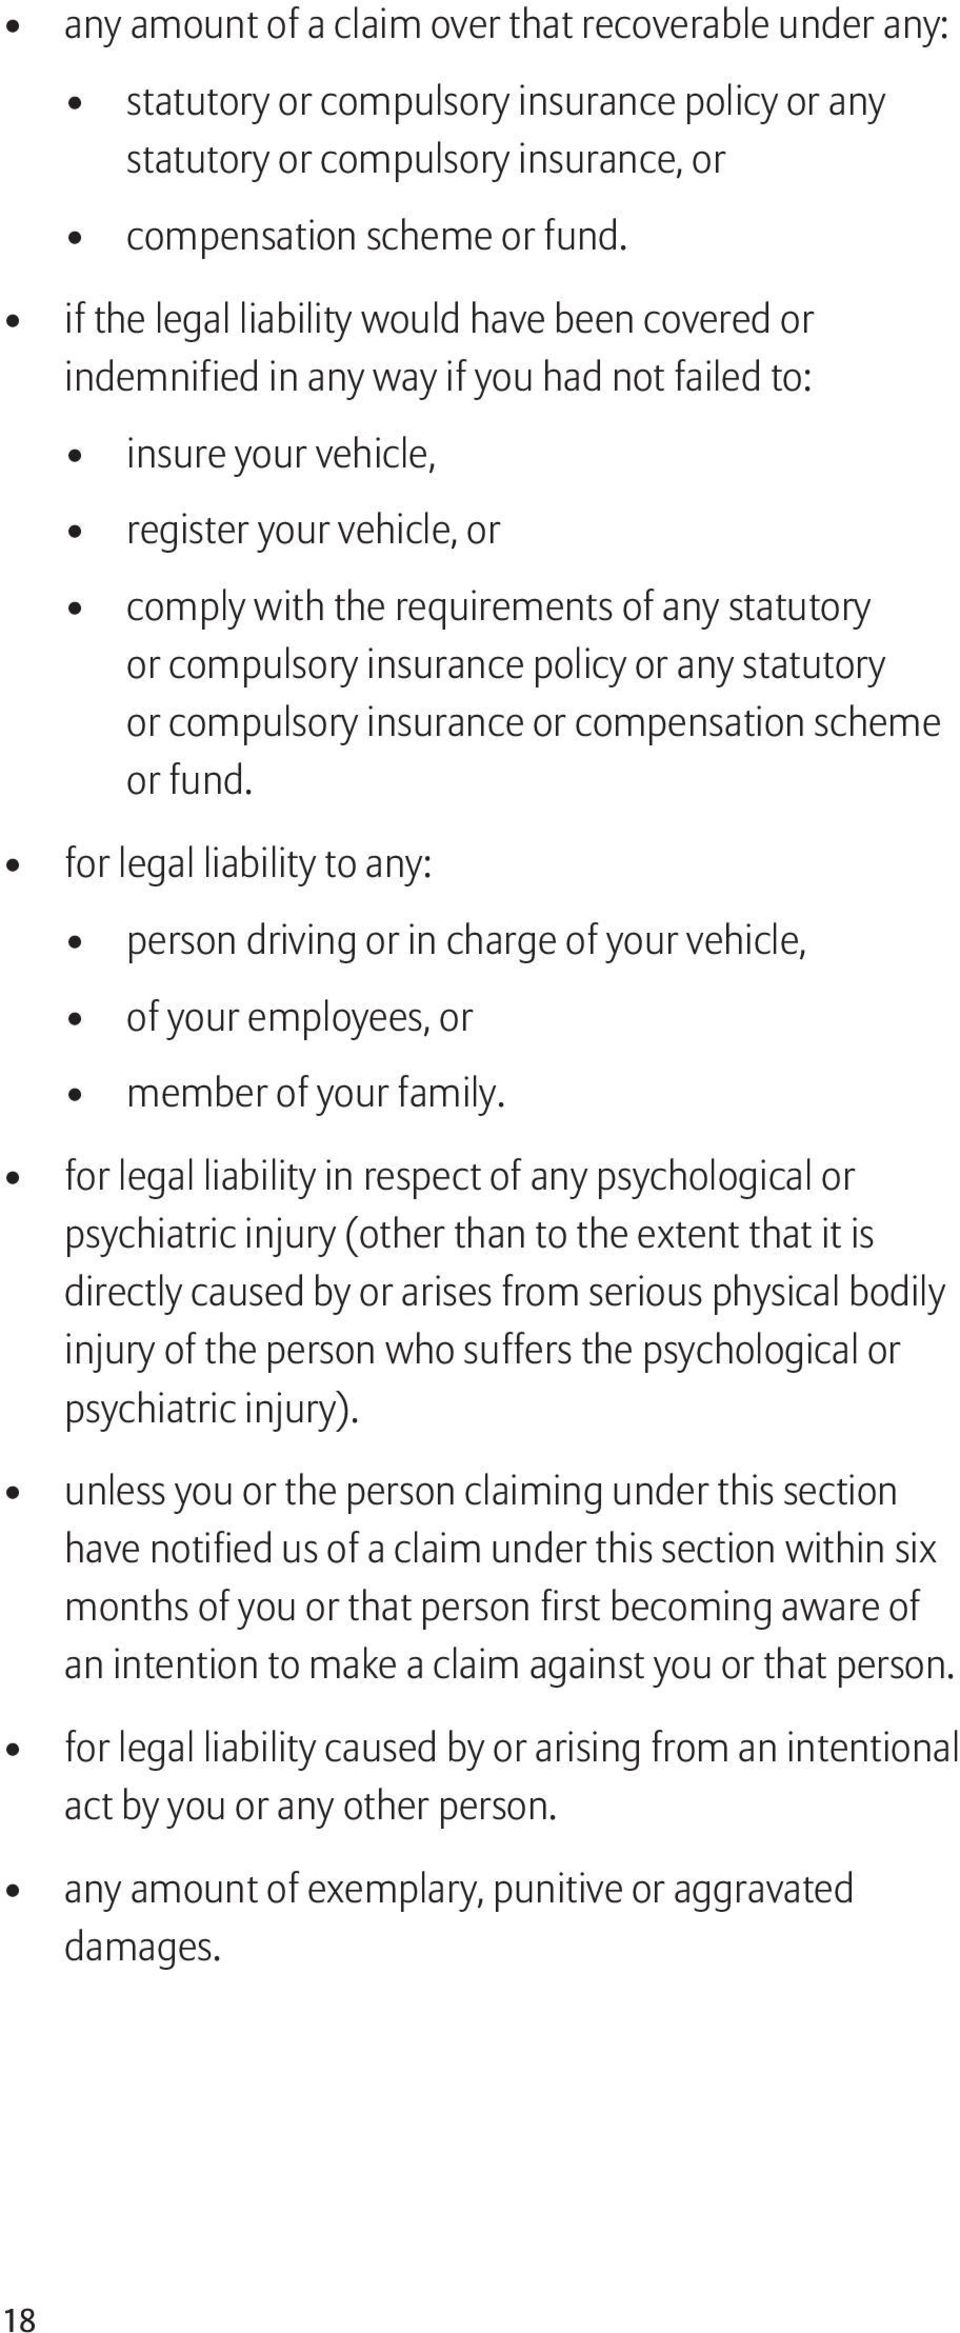 compulsory insurance policy or any statutory or compulsory insurance or compensation scheme or fund.